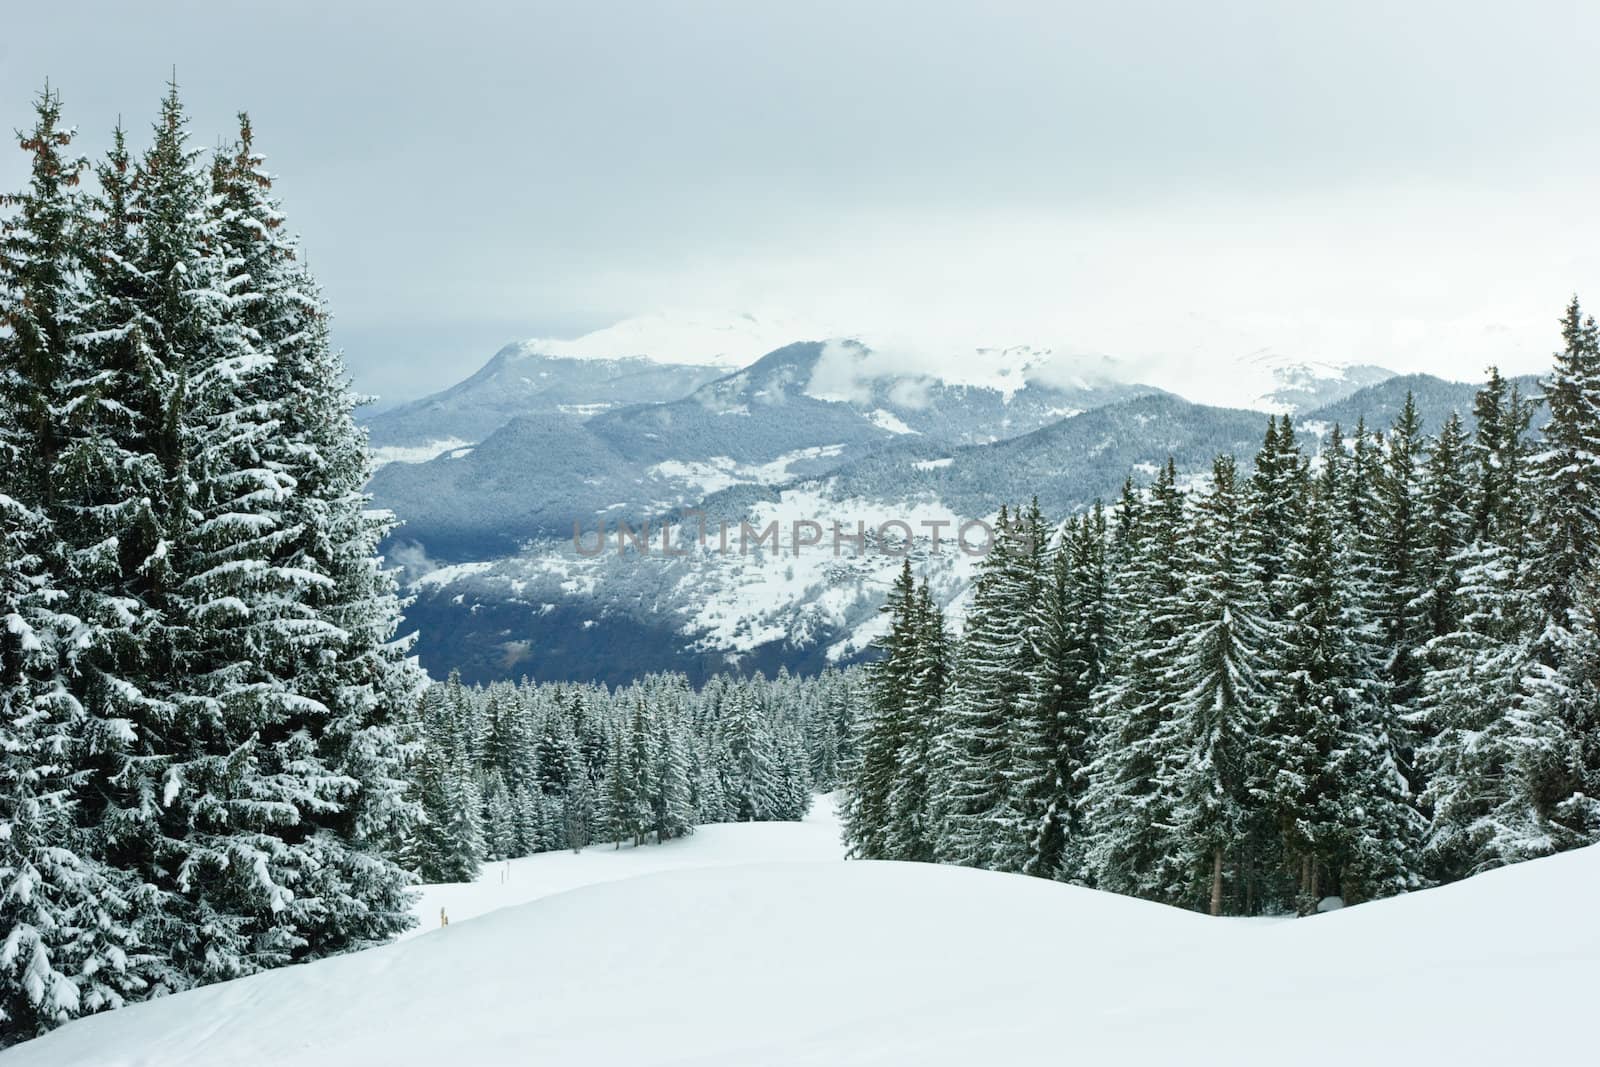 Fir trees on winter mountain by naumoid